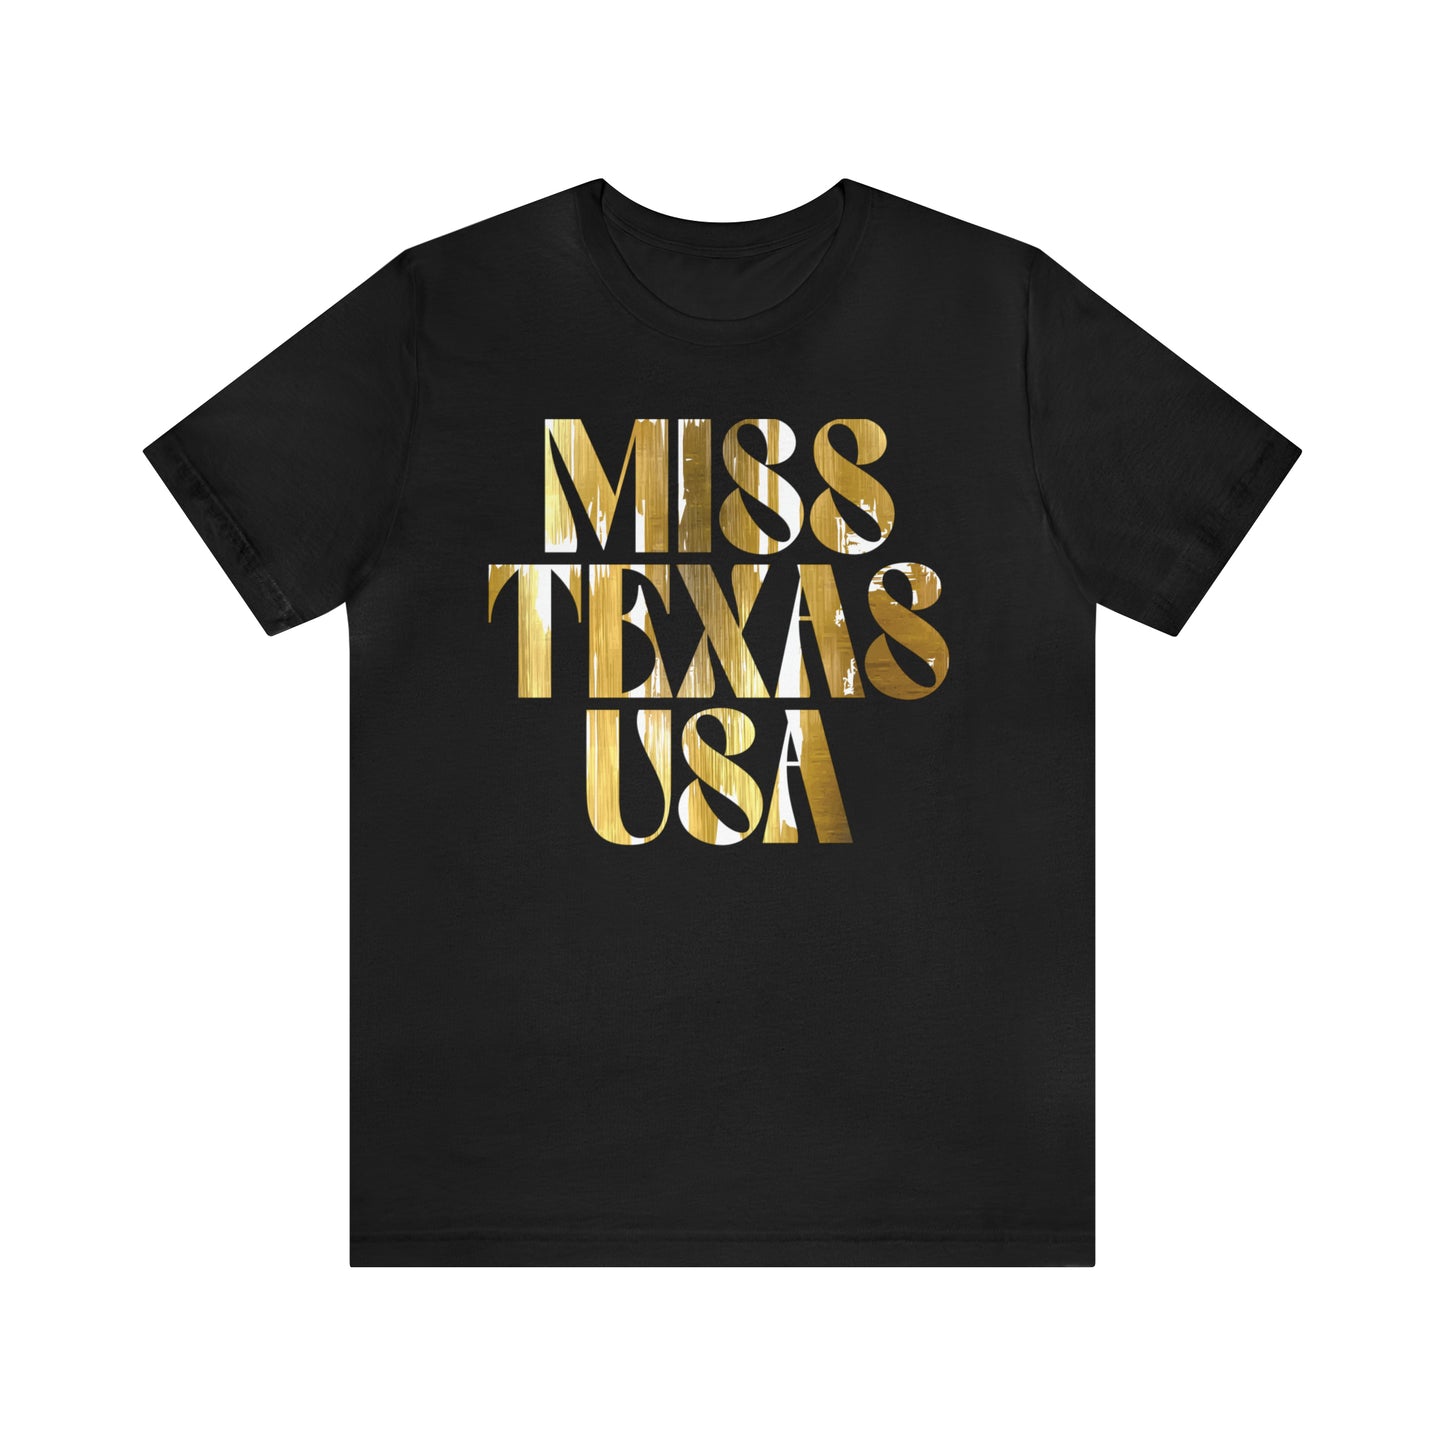 "Texas Gold Dos" T-shirt - Miss Texas USA